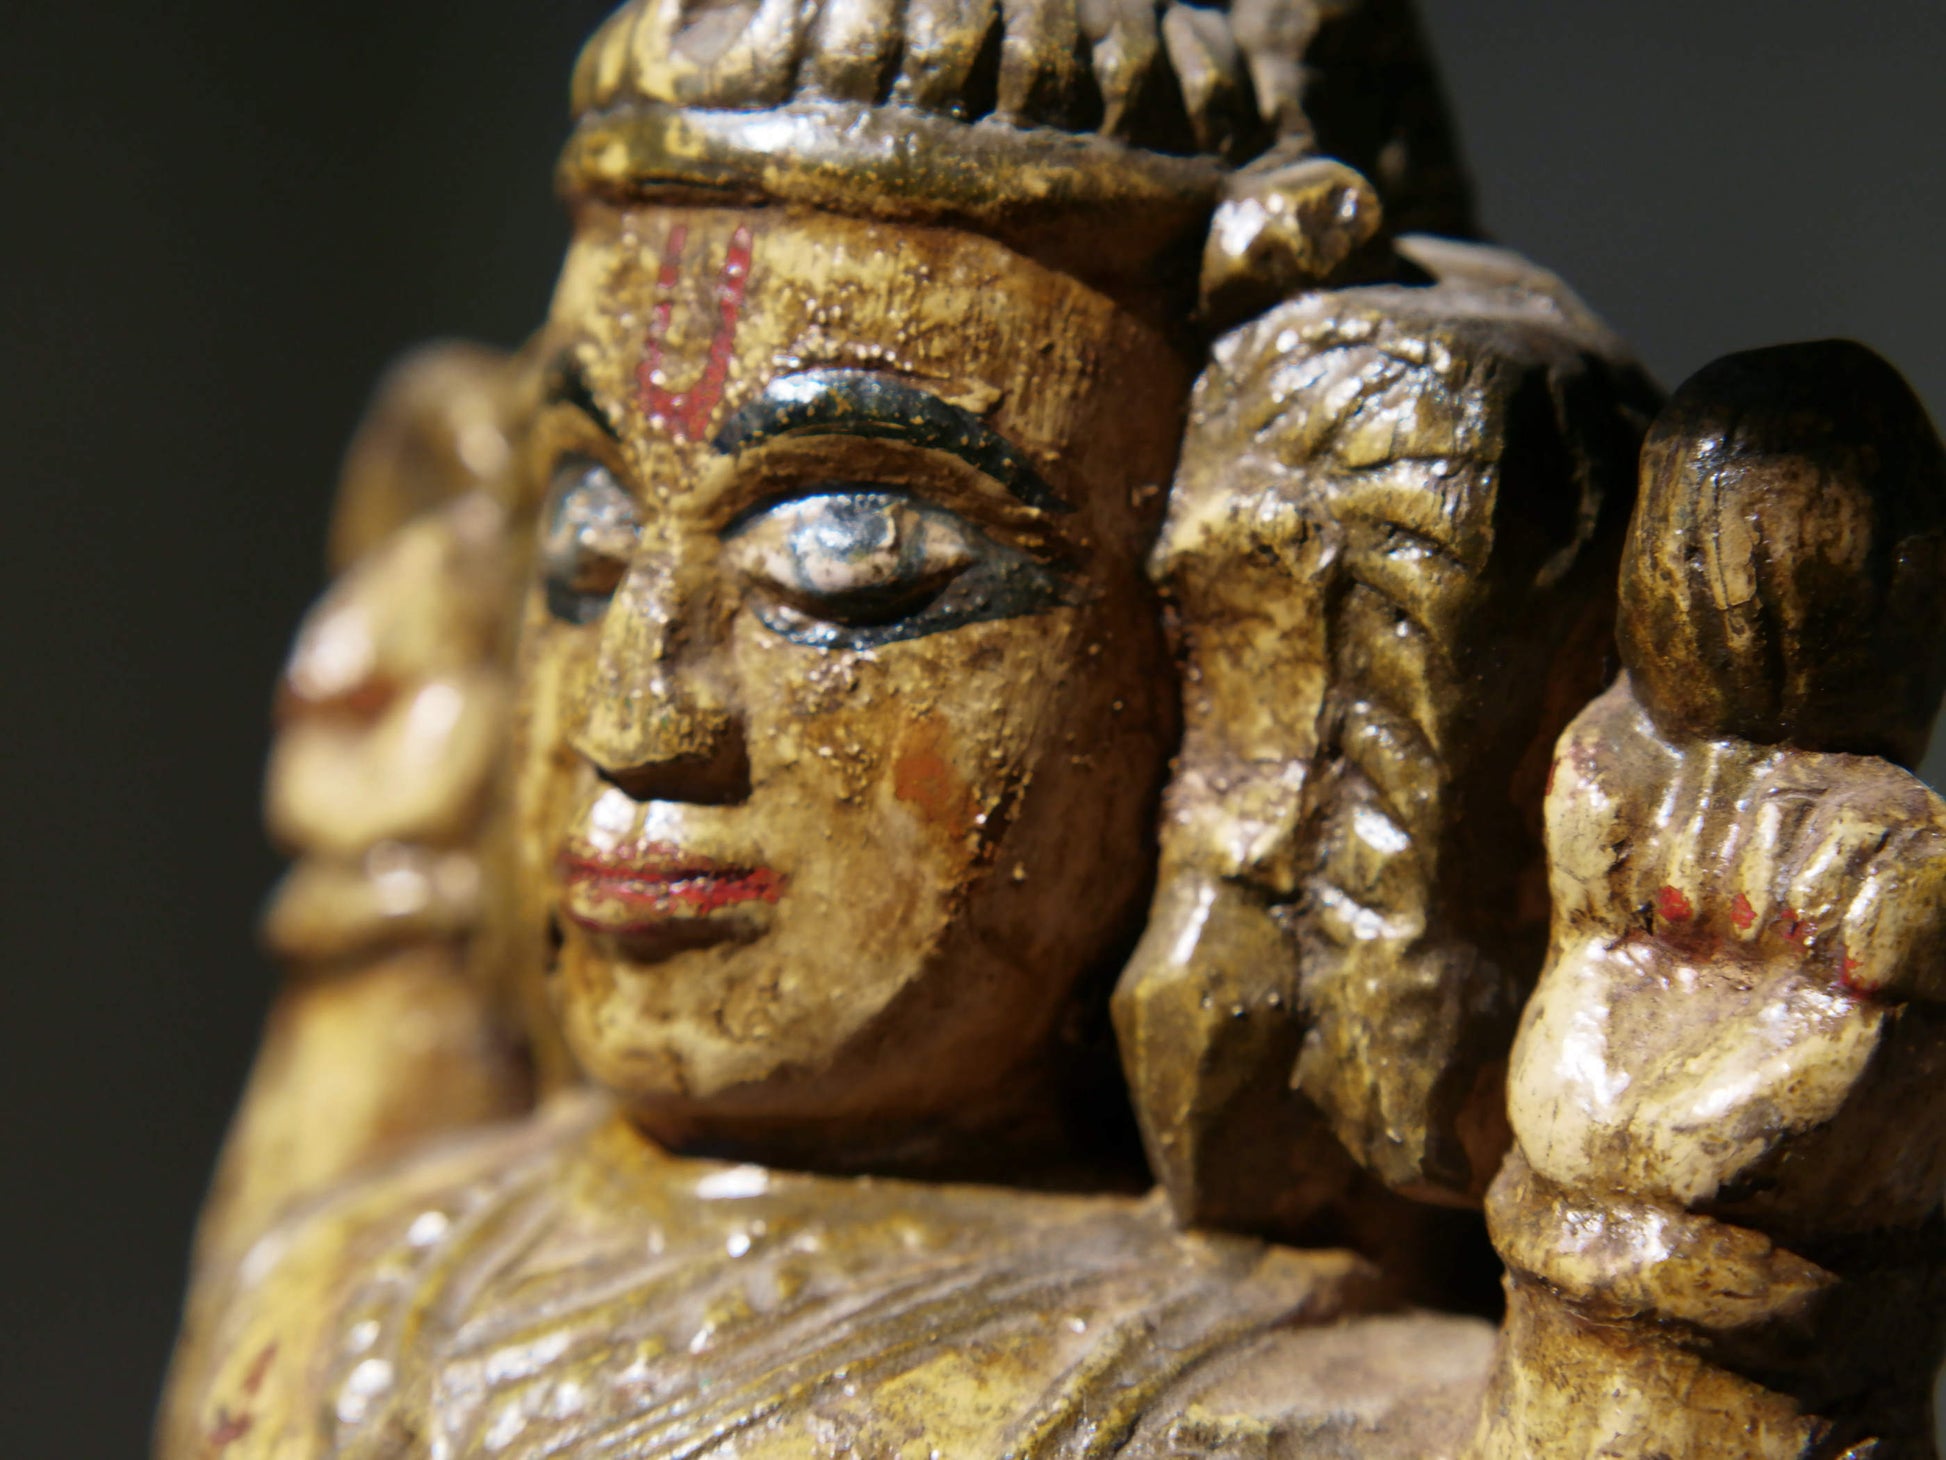 statua indiana raffigurante divinità hindù  scultura in legno laccata su base di gesso